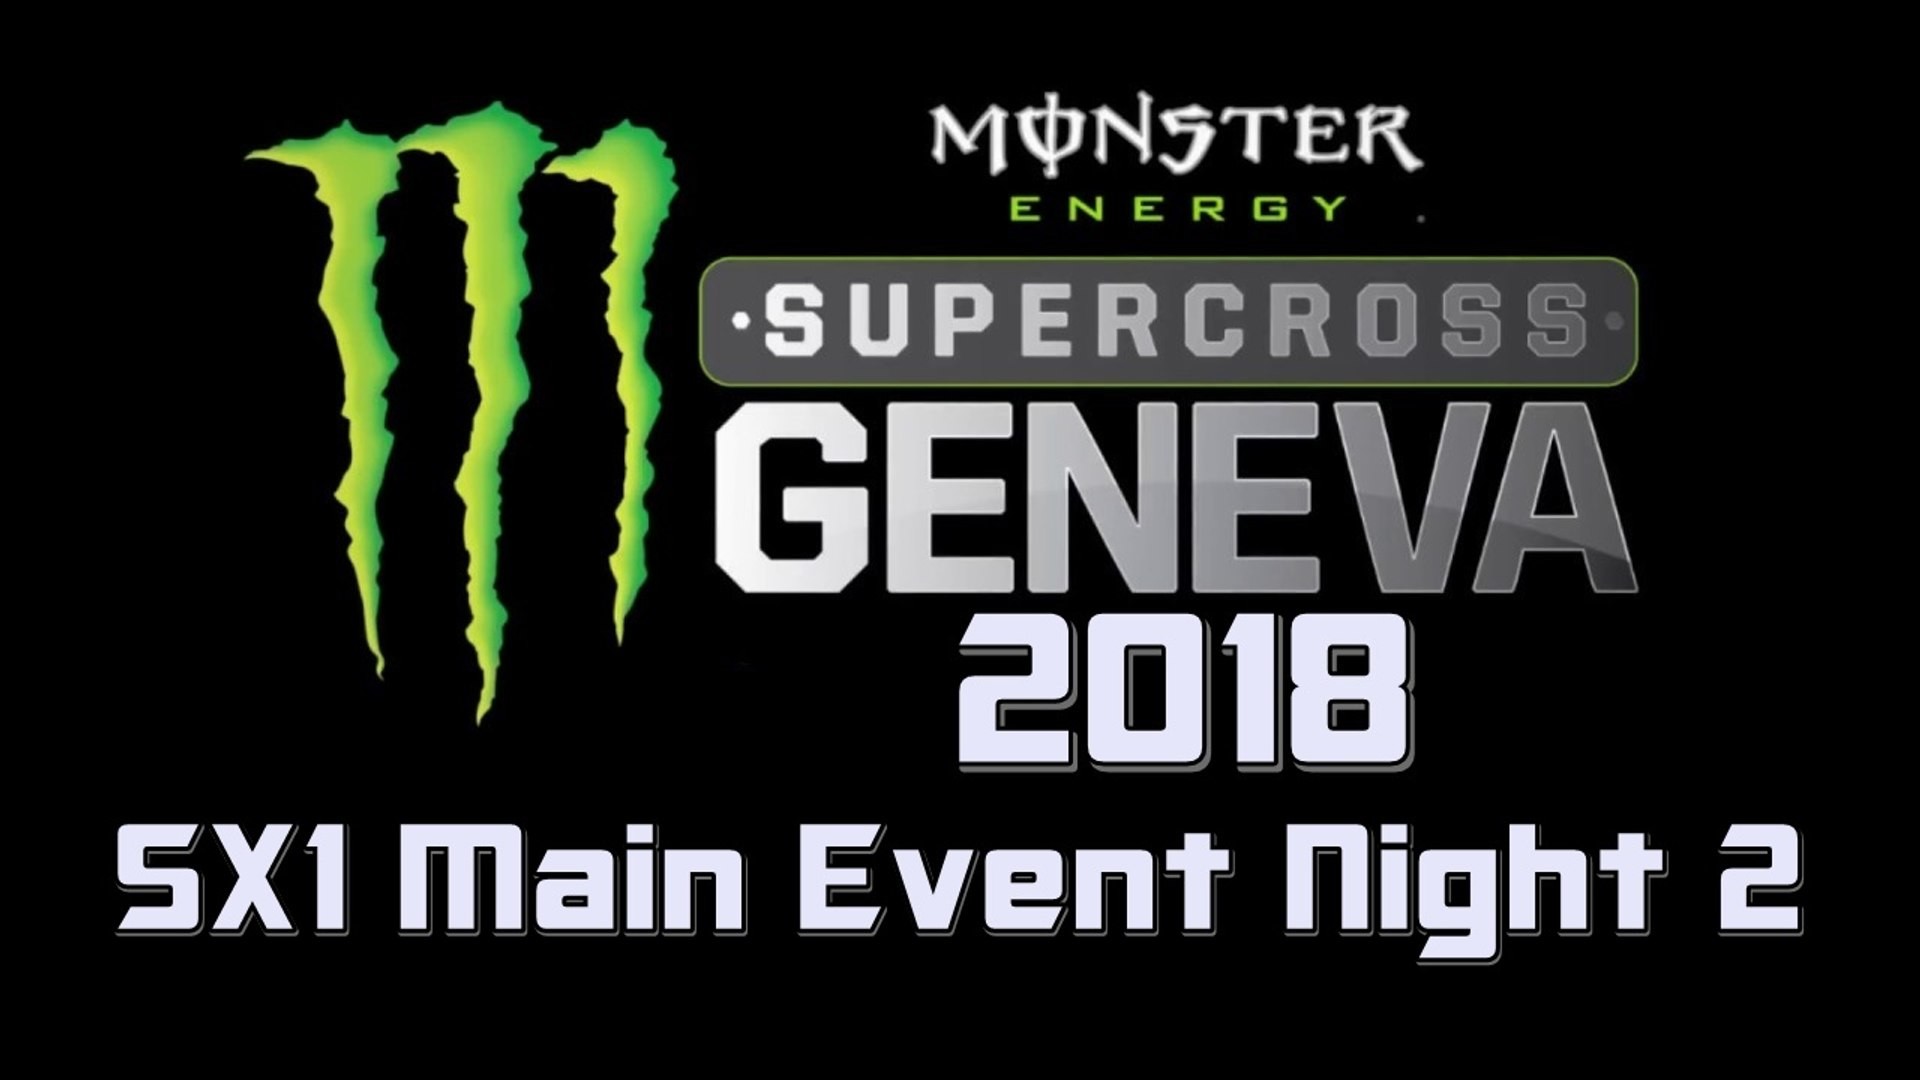 1920x1080 Monster Energy Supercross Geneva 2018 SX1 Main Event - Night 2 HD